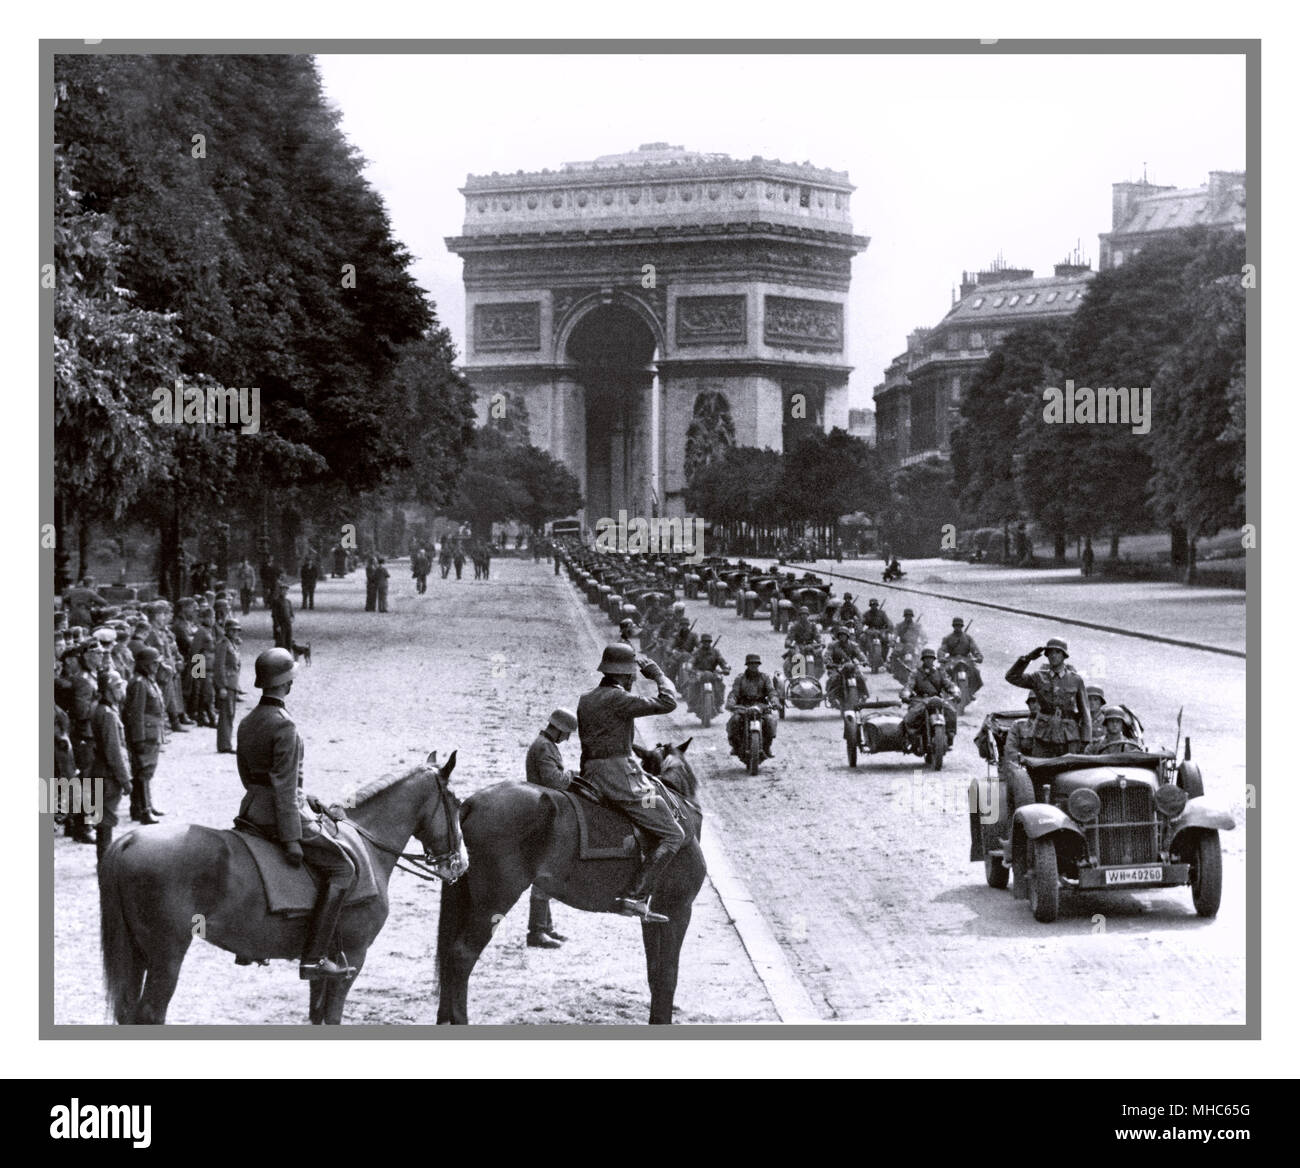 PARIS FRANCE NAZI OCCUPATION World War II 1940 Nazi German occupying forces enter Paris German soldiers parade down Avenue Foch with Arc de Triomphe behind Paris France 14 June 1940 Stock Photo